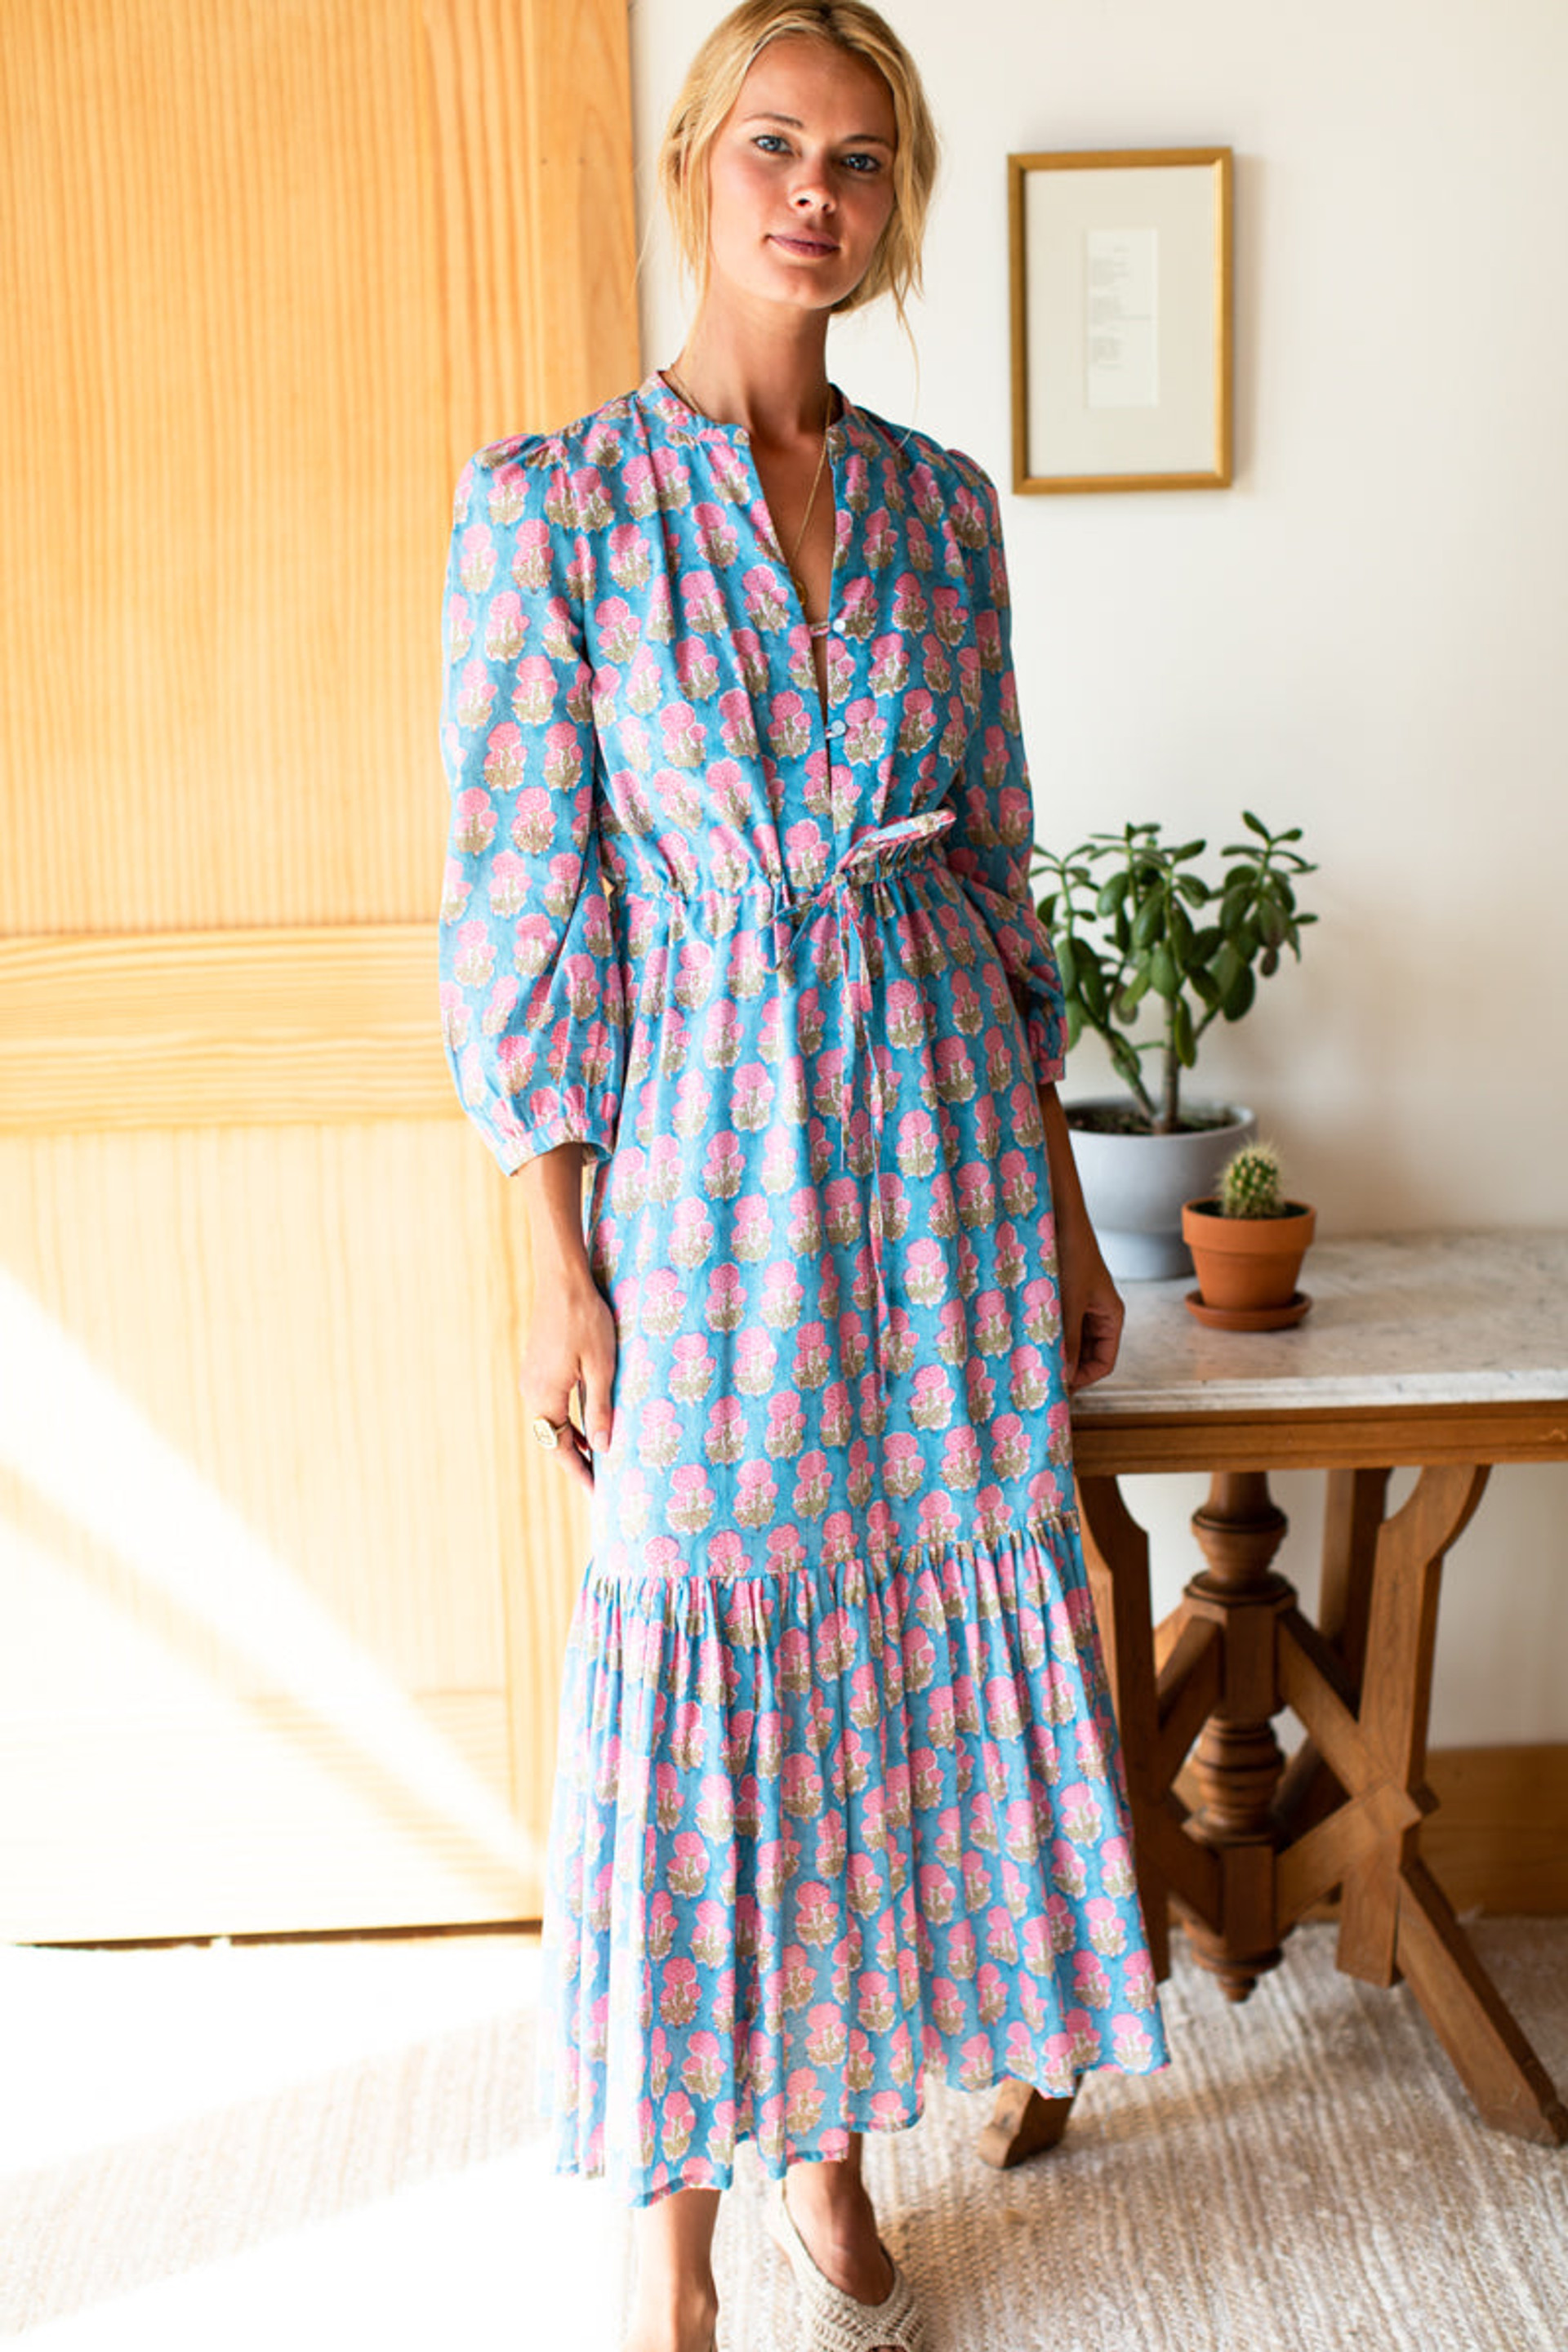 Emerson Fry Frances Dress 2, Marjorie Organic - Monkee's of Mount Pleasant